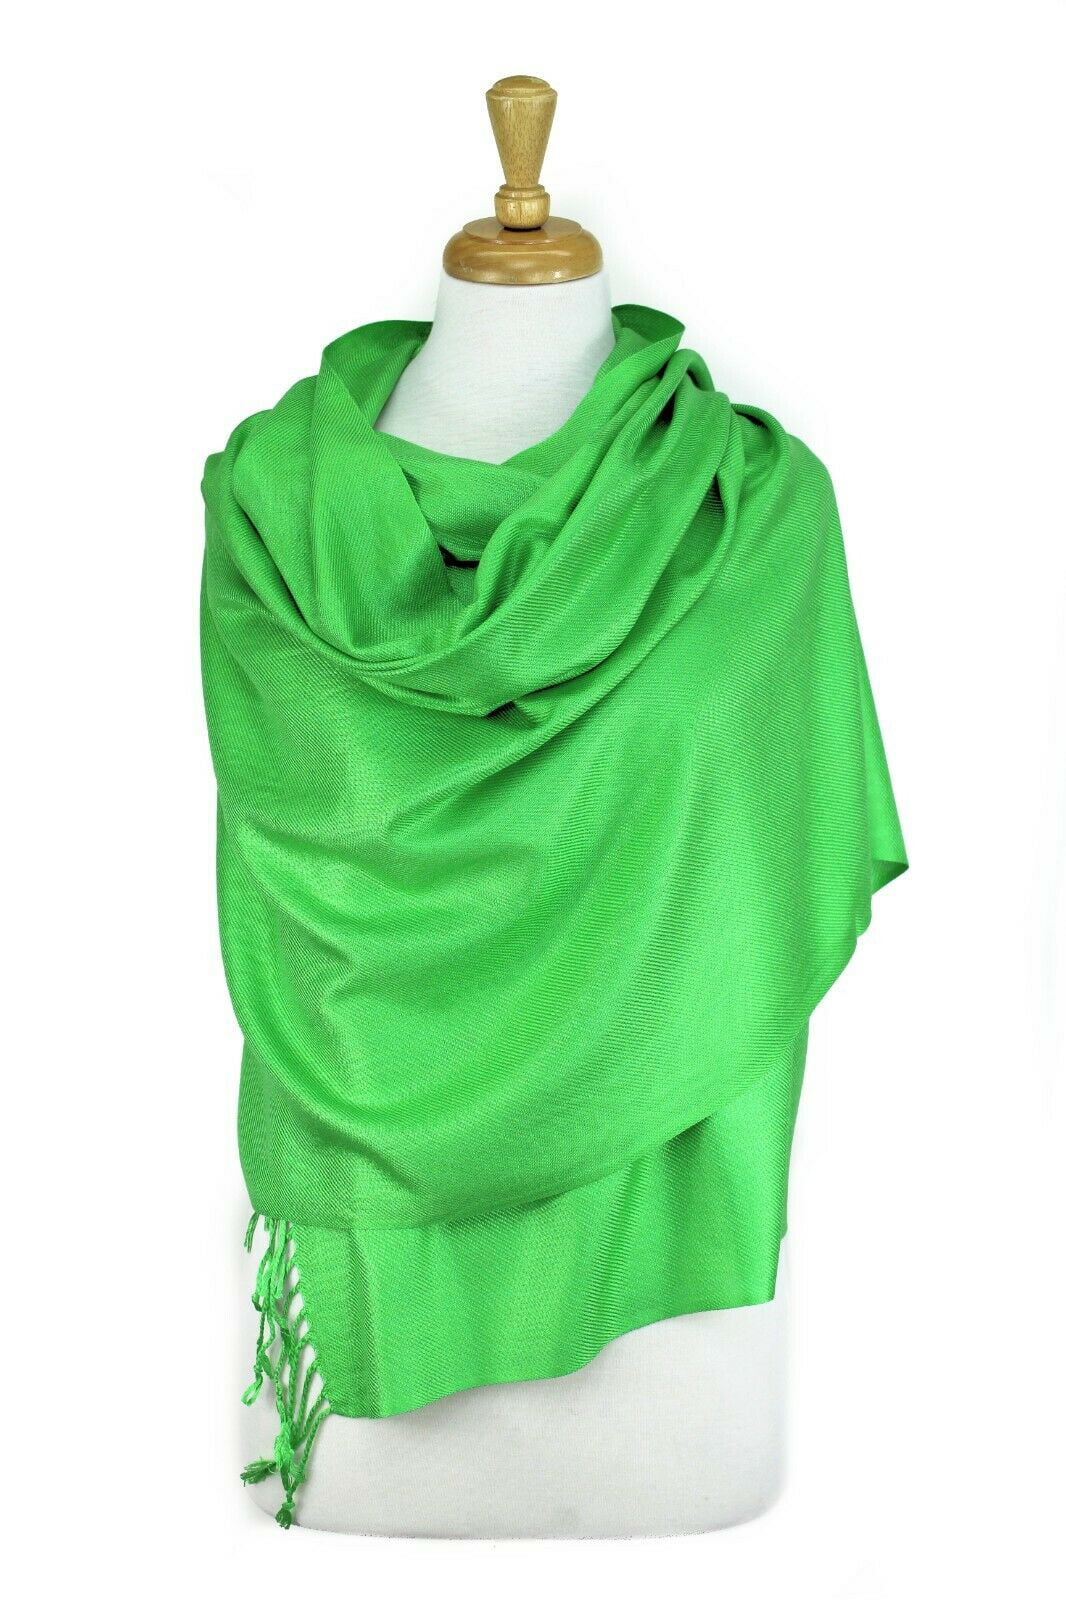 Plain coloured pashmina shiny silk blend shawl wrap throw seconds